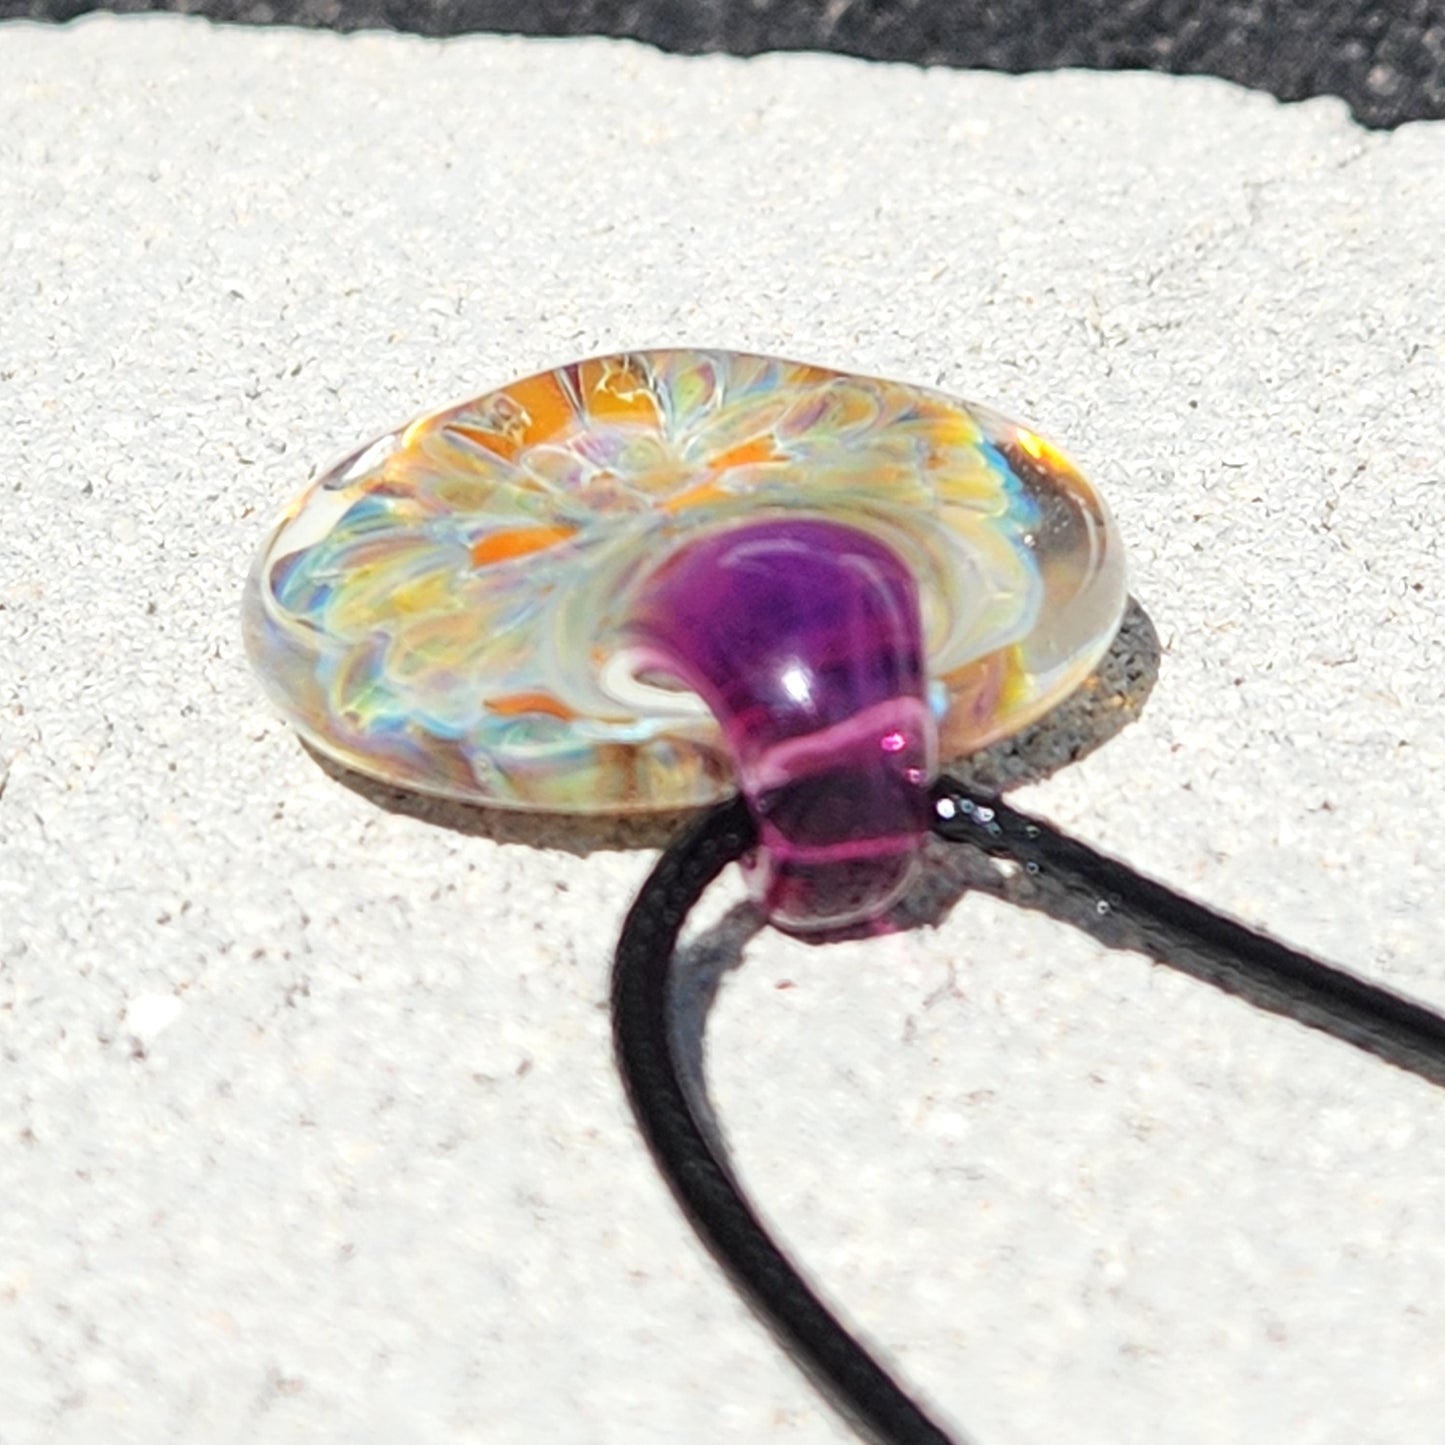 Handmade Blown Glass Pendant: Captivating Borosilicate Jewelry Designs